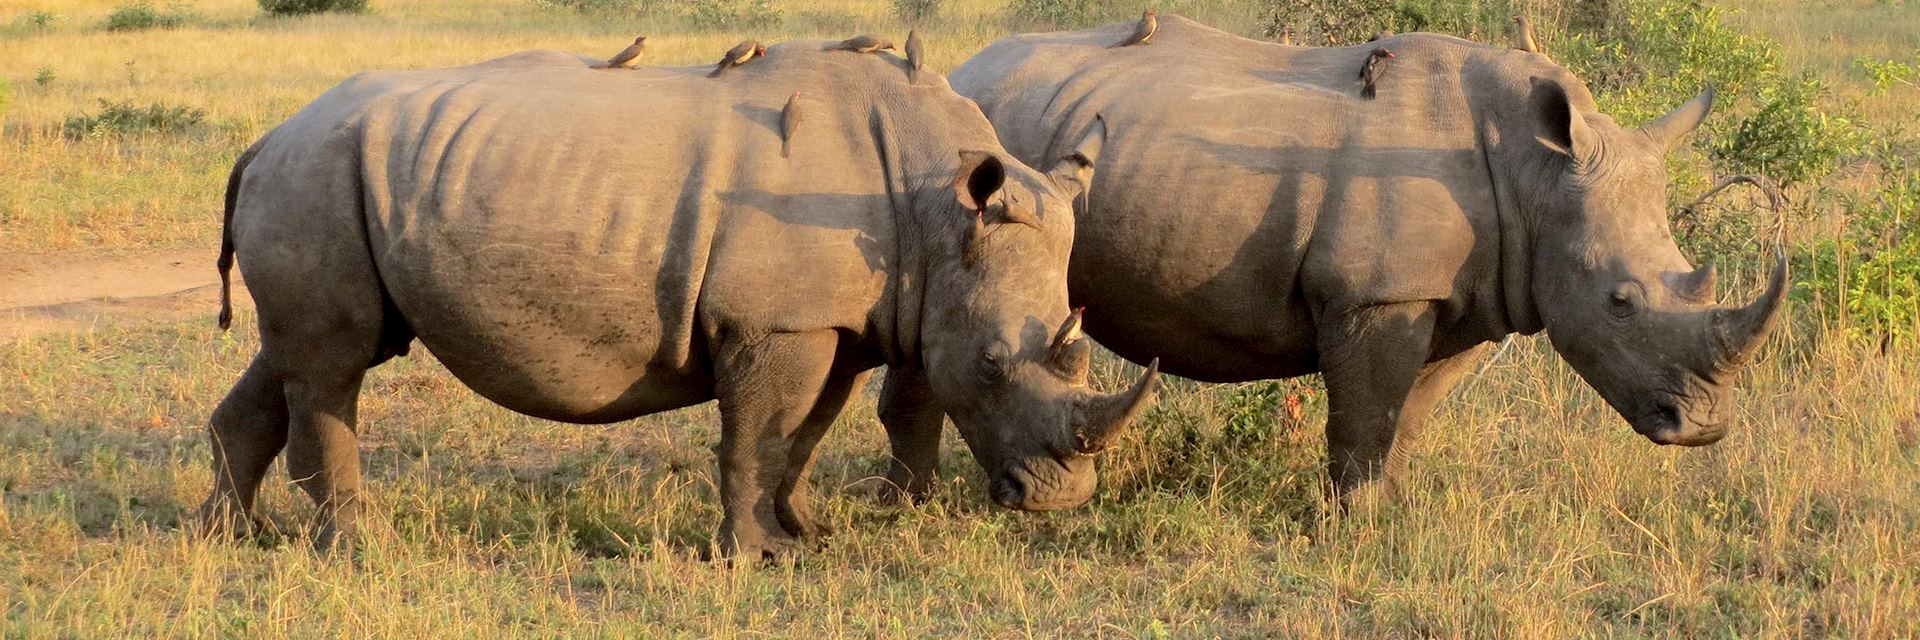 White rhino, Thornybush Reserve, South Africa